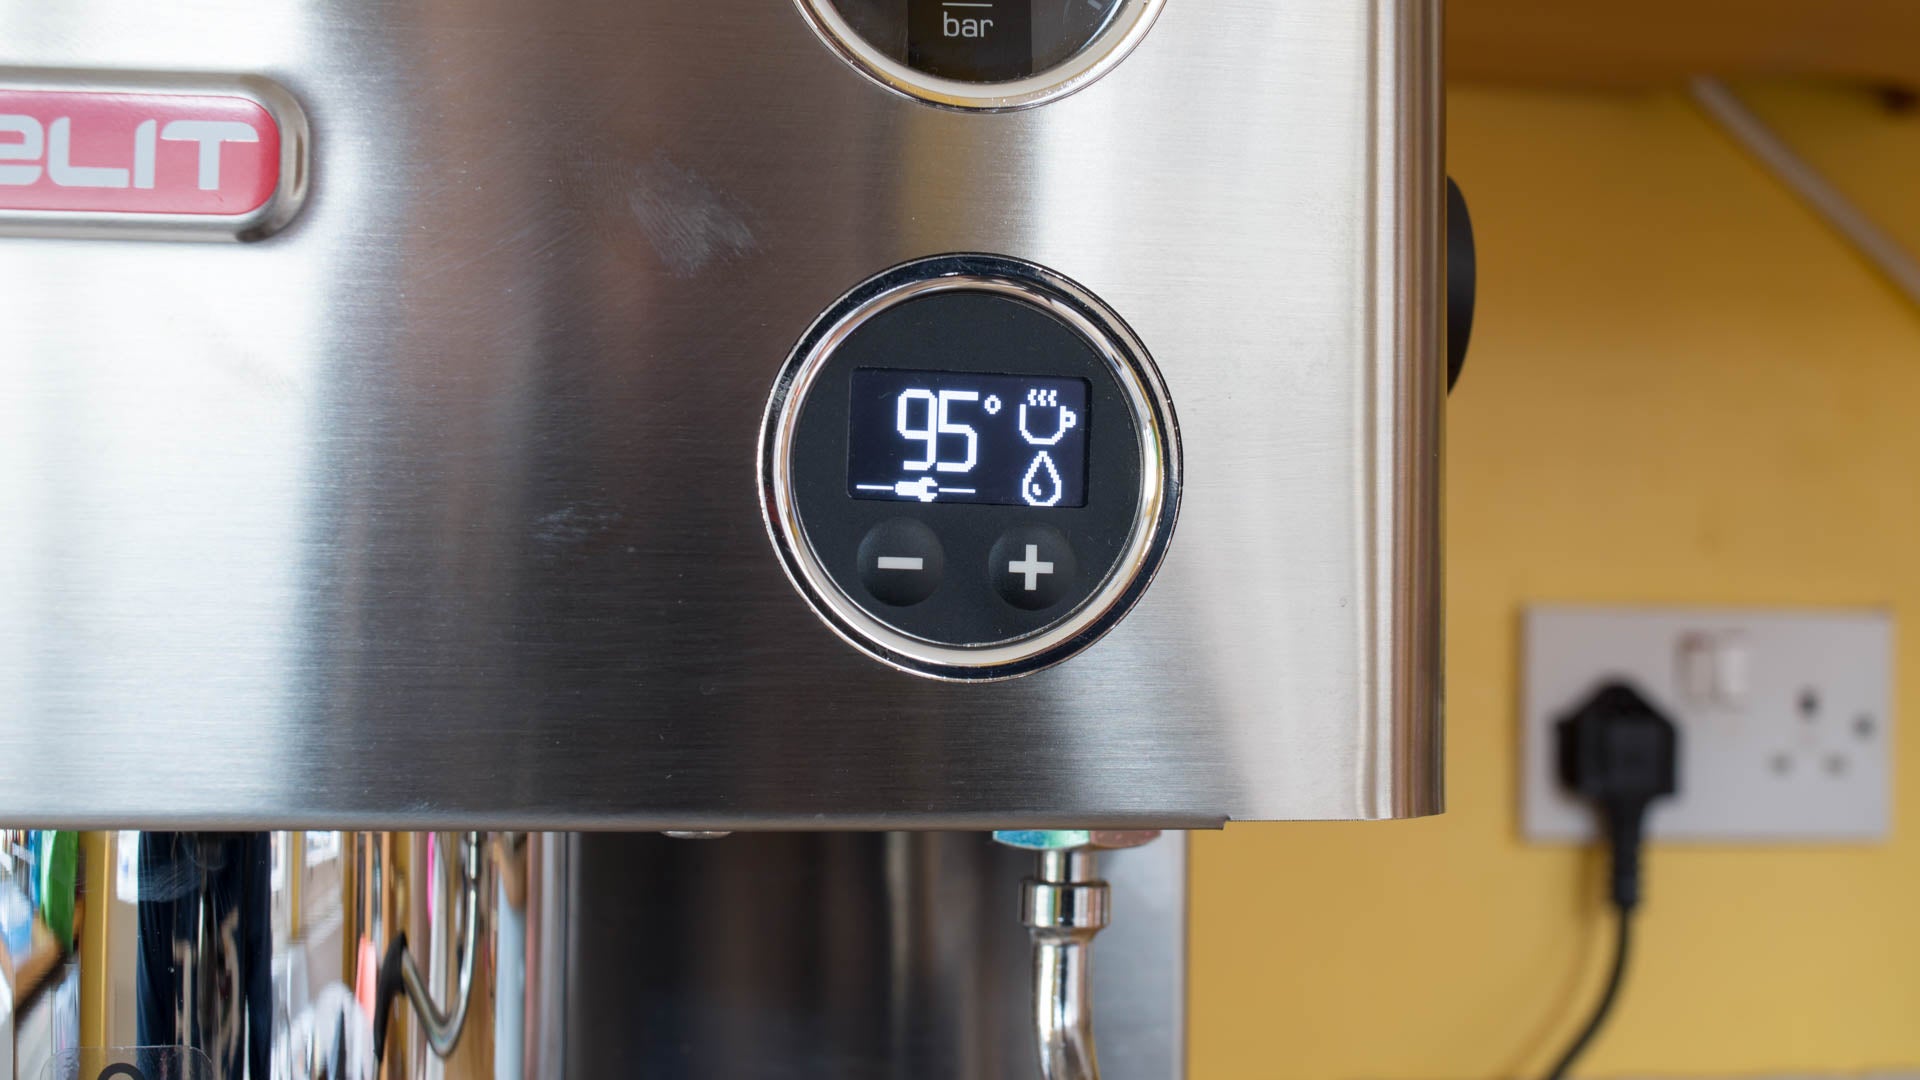 Lelit Kate espresso machine displaying temperature at 95 degrees Celsius.